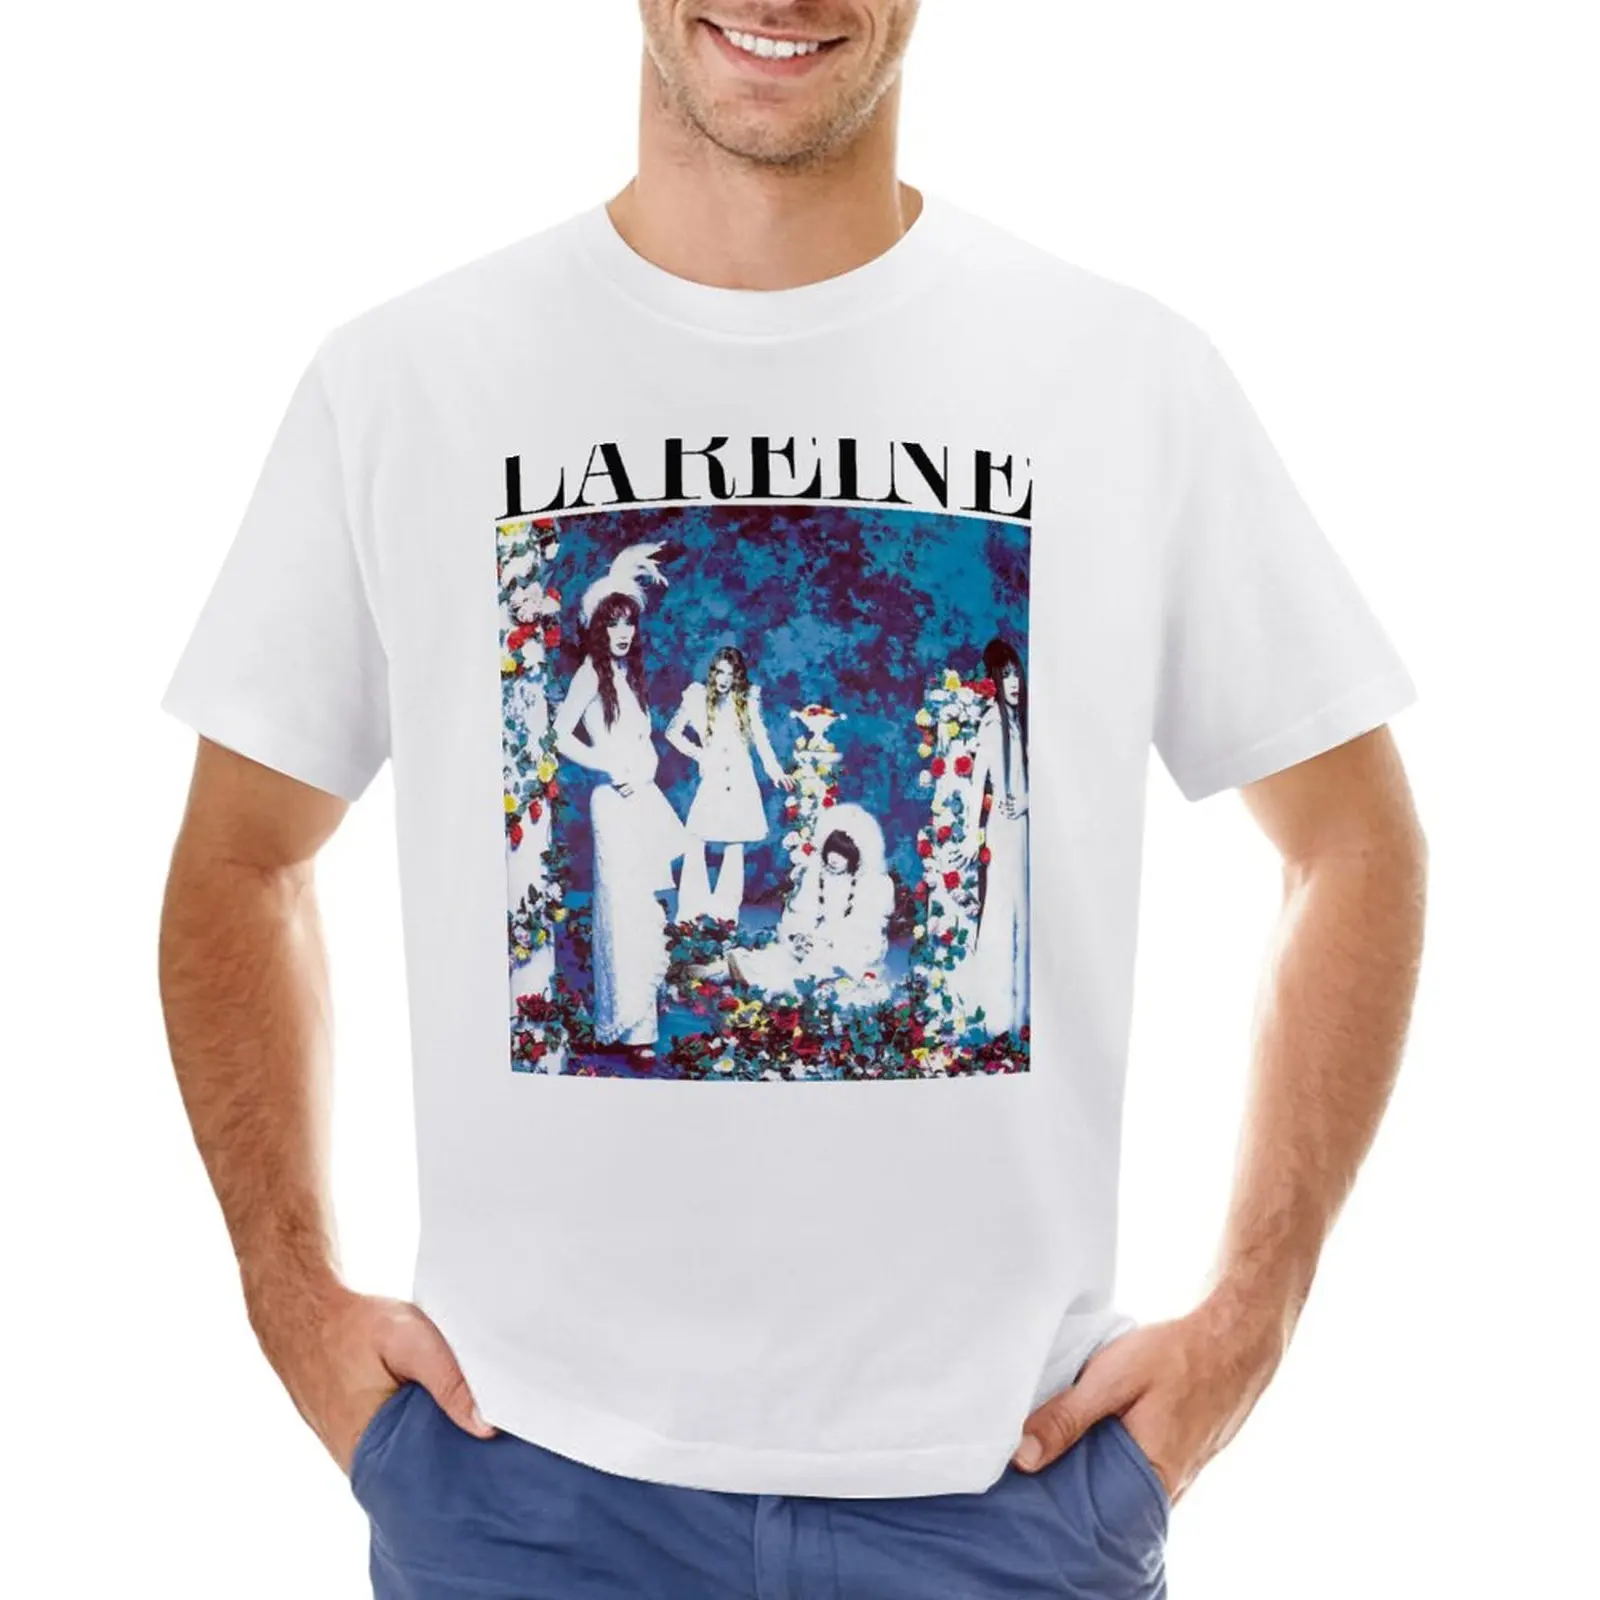 

Lareine - Band Shirt T-Shirt Blouse sublime plain cute tops mens graphic t-shirts pack